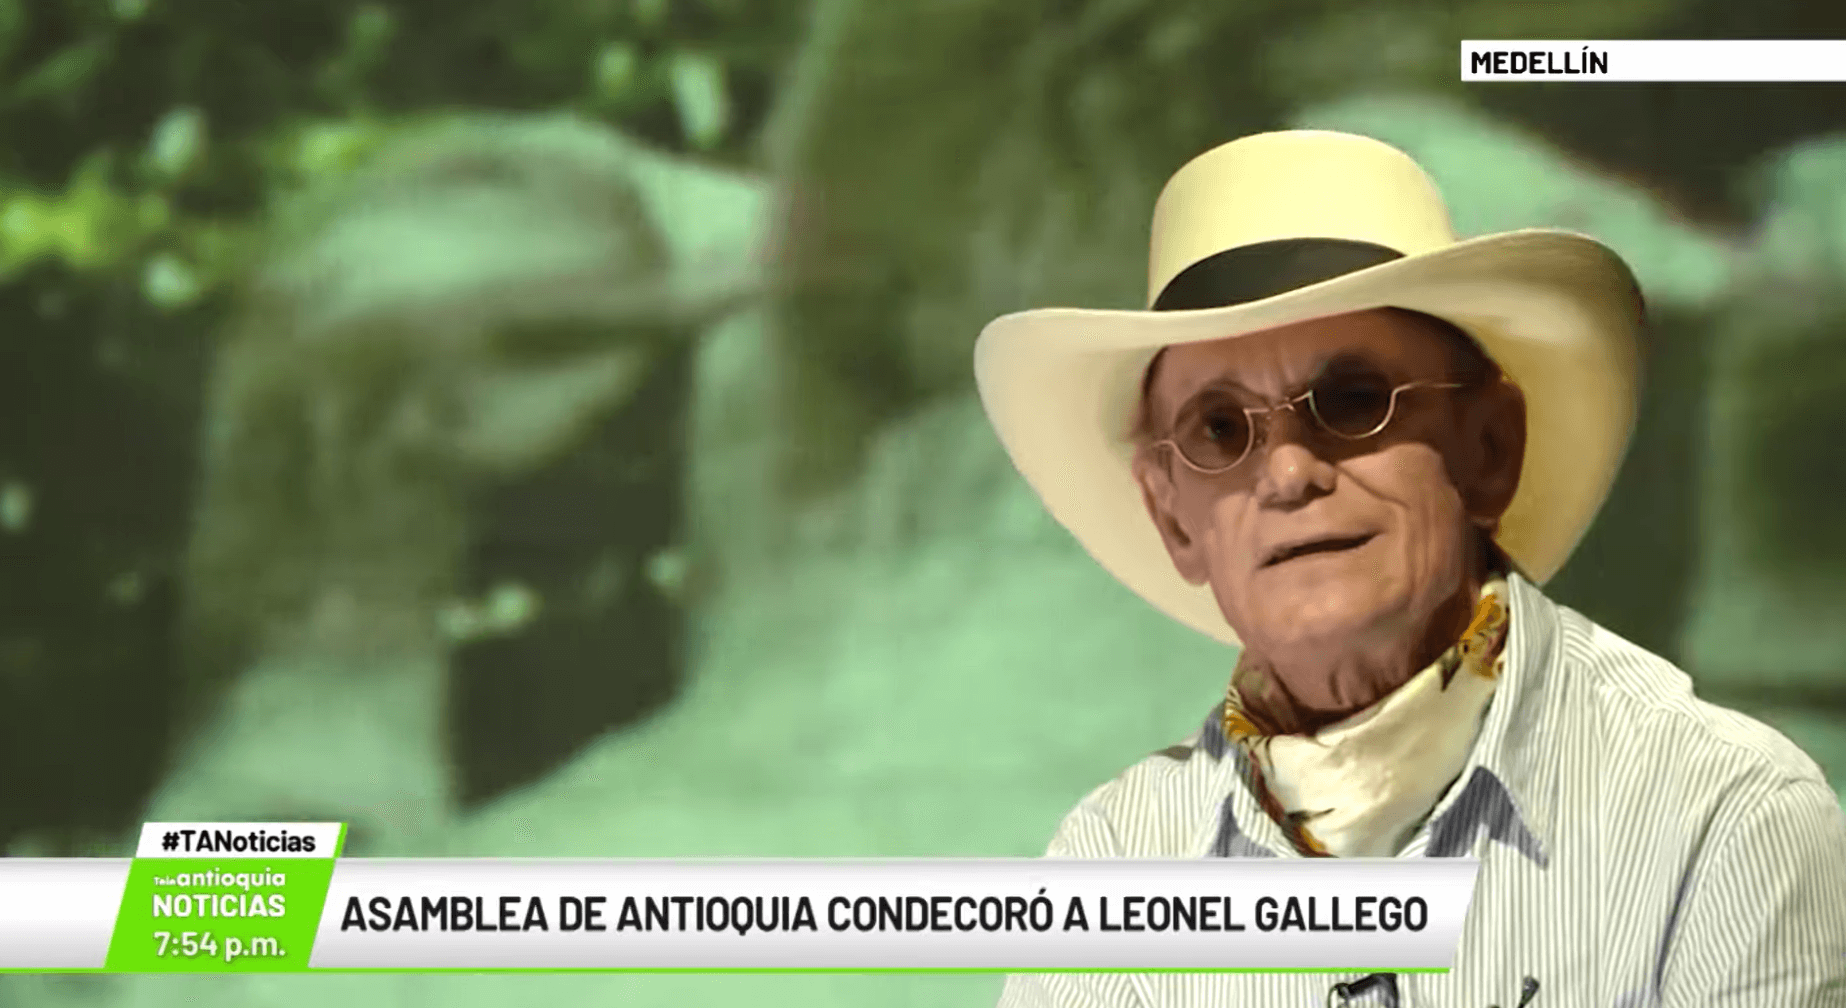 Asamblea de Antioquia condecoró a Leonel Gallego